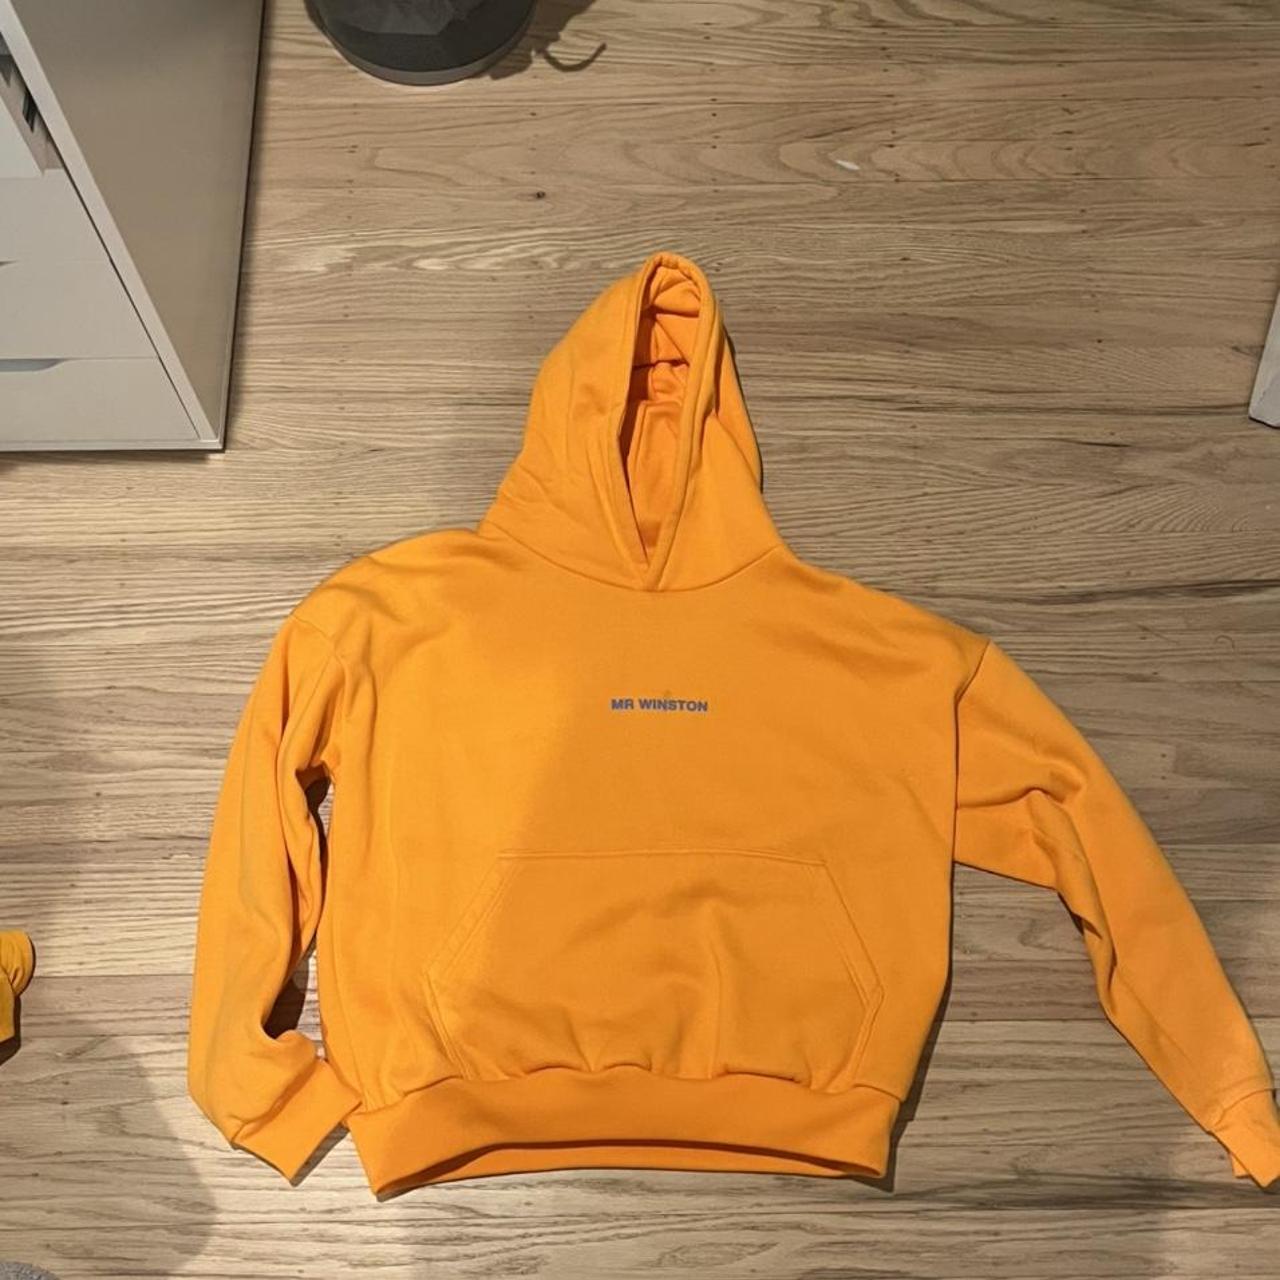 Product Image 1 - Mr Winston orange hoodie. Only